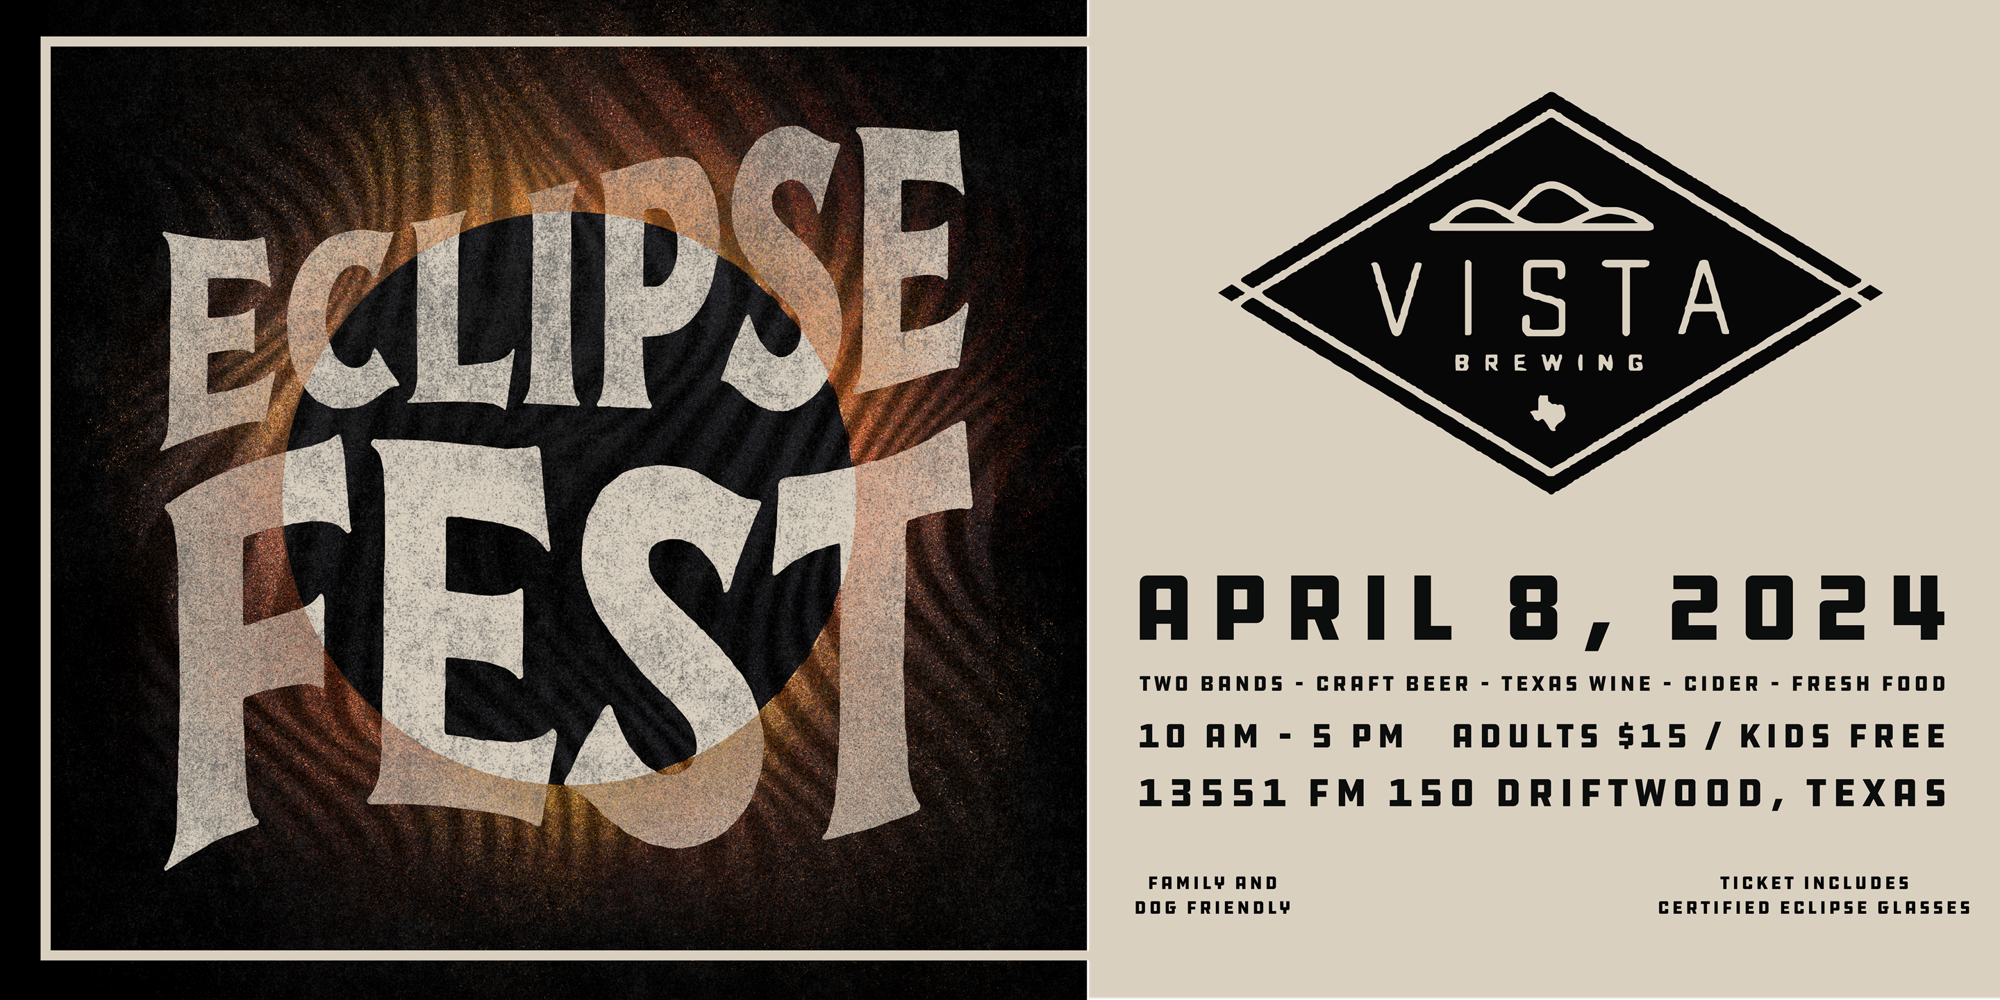 Eclipse Fest at Vista Brewing promotional image